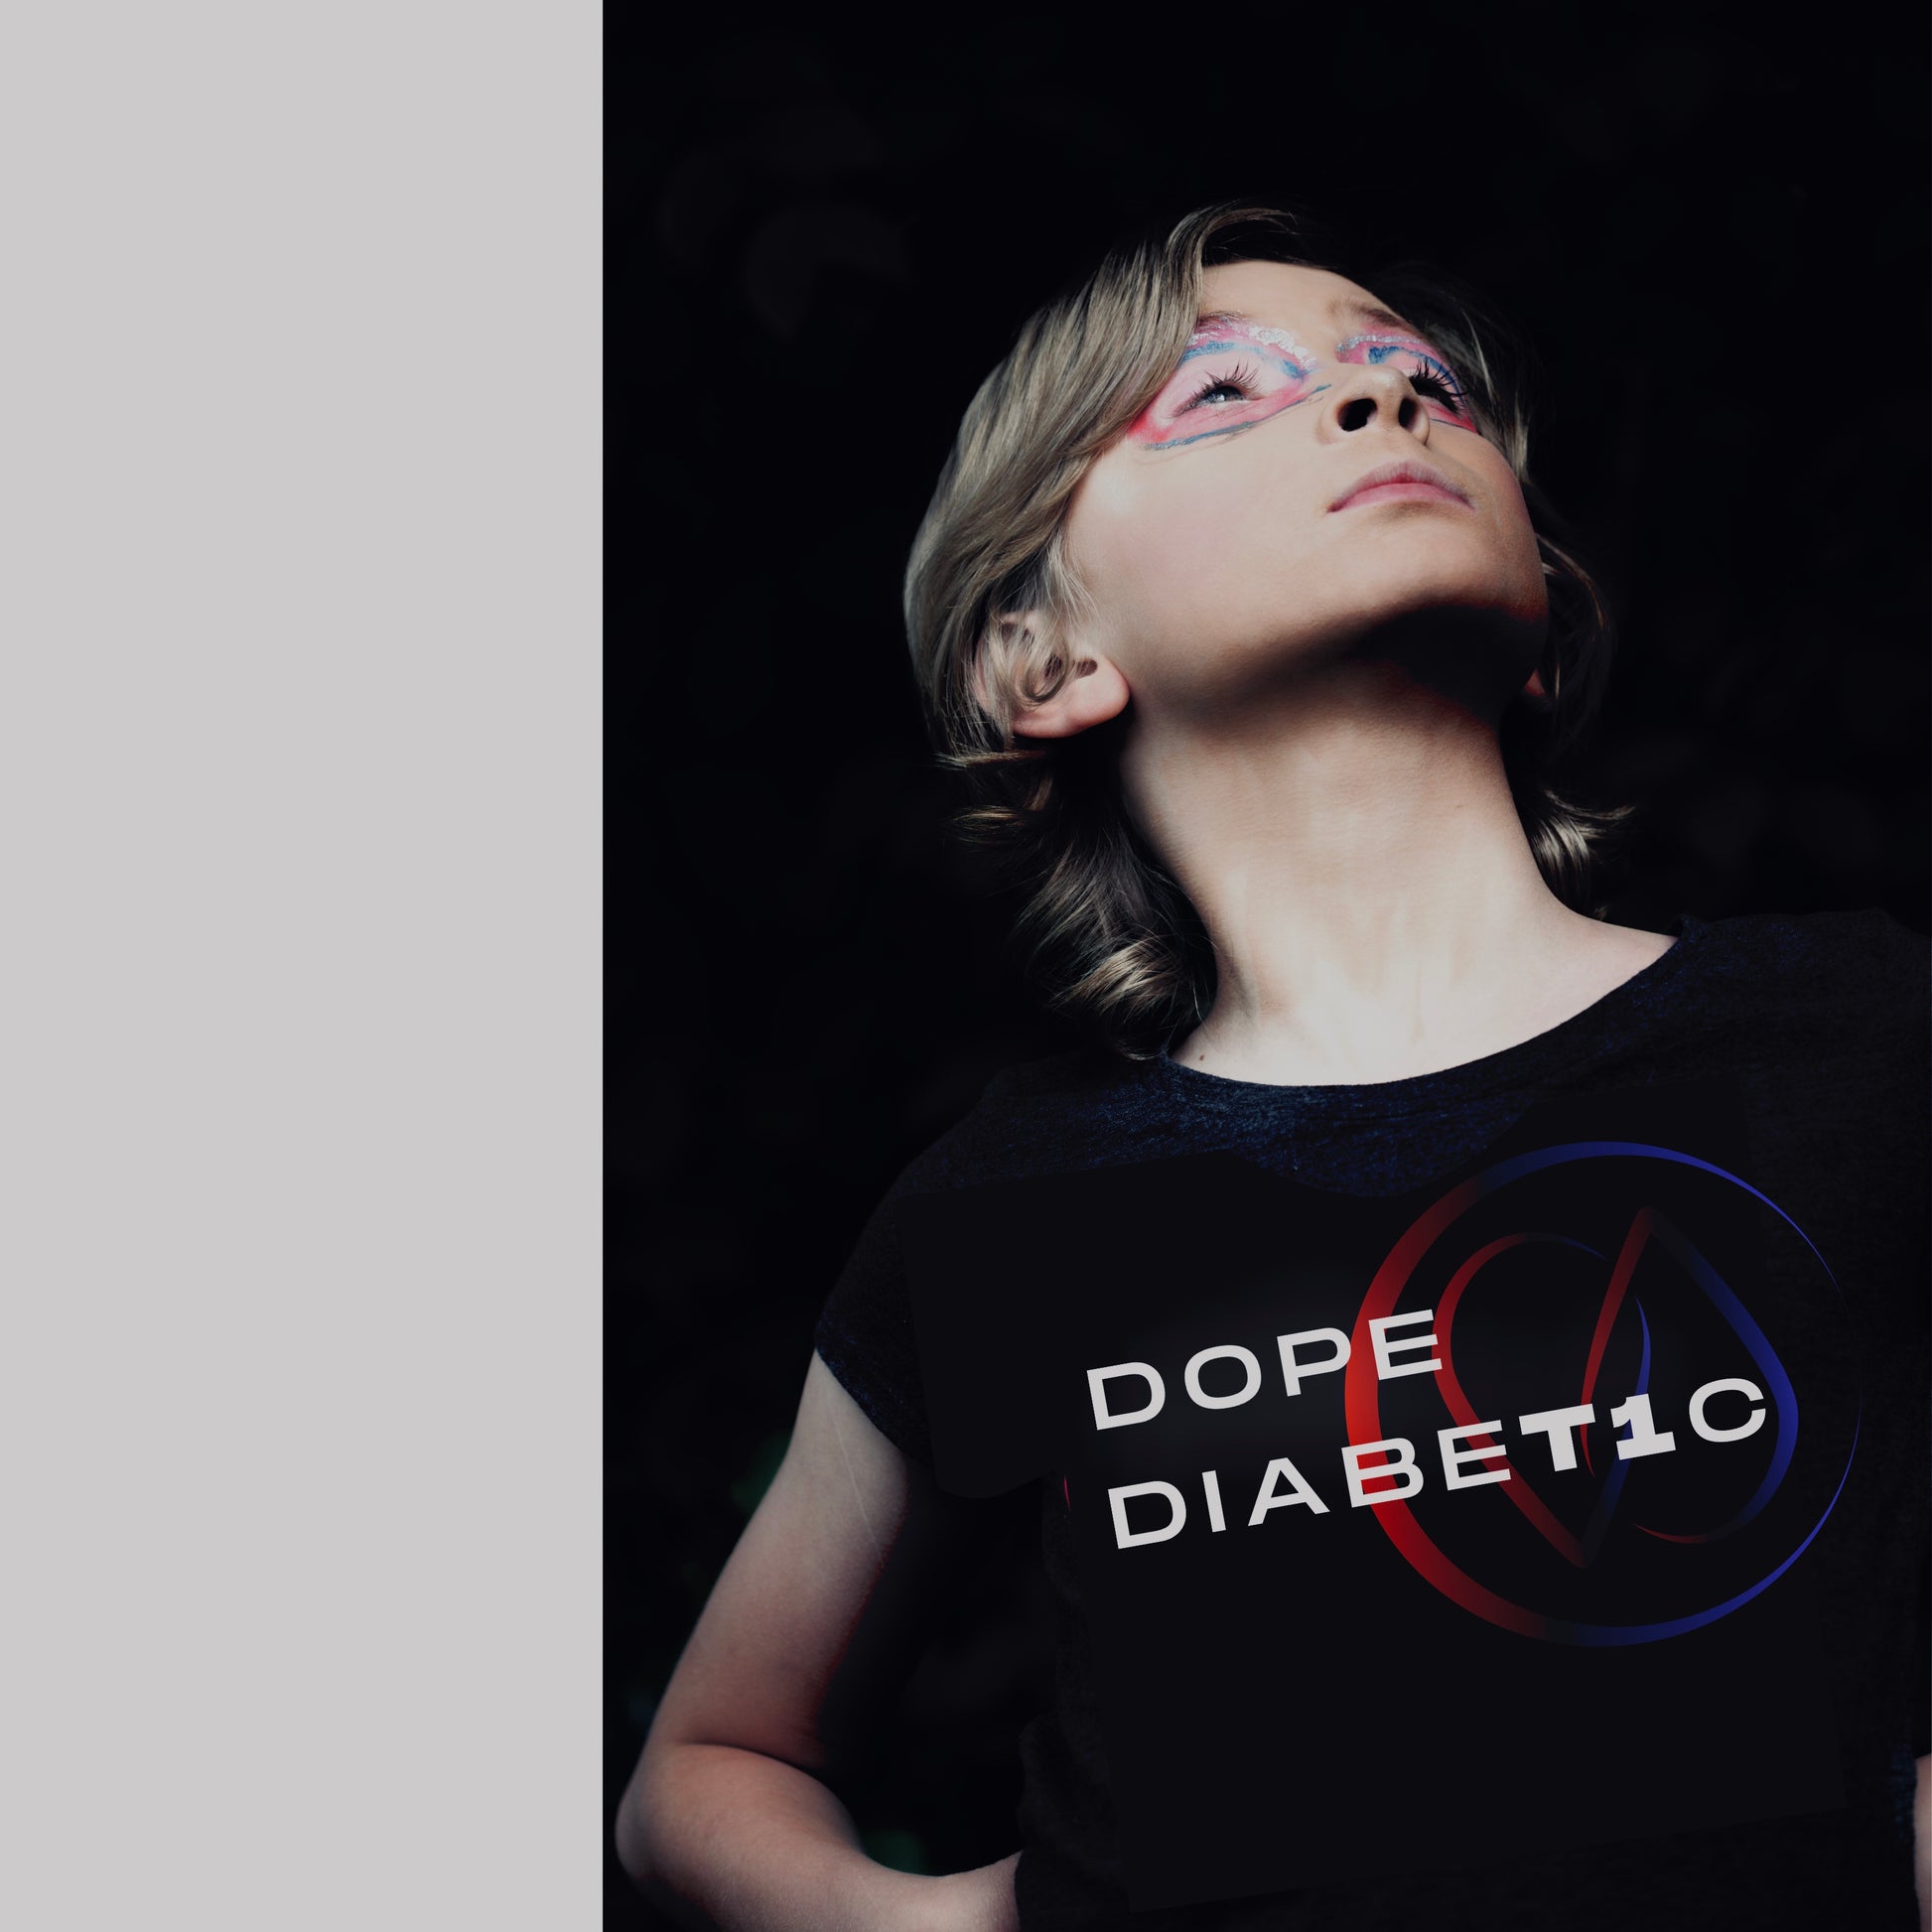 Dope DIABET1C Adult Short-Sleeve Unisex T-Shirt S-3XL - ThisDiabetic.com